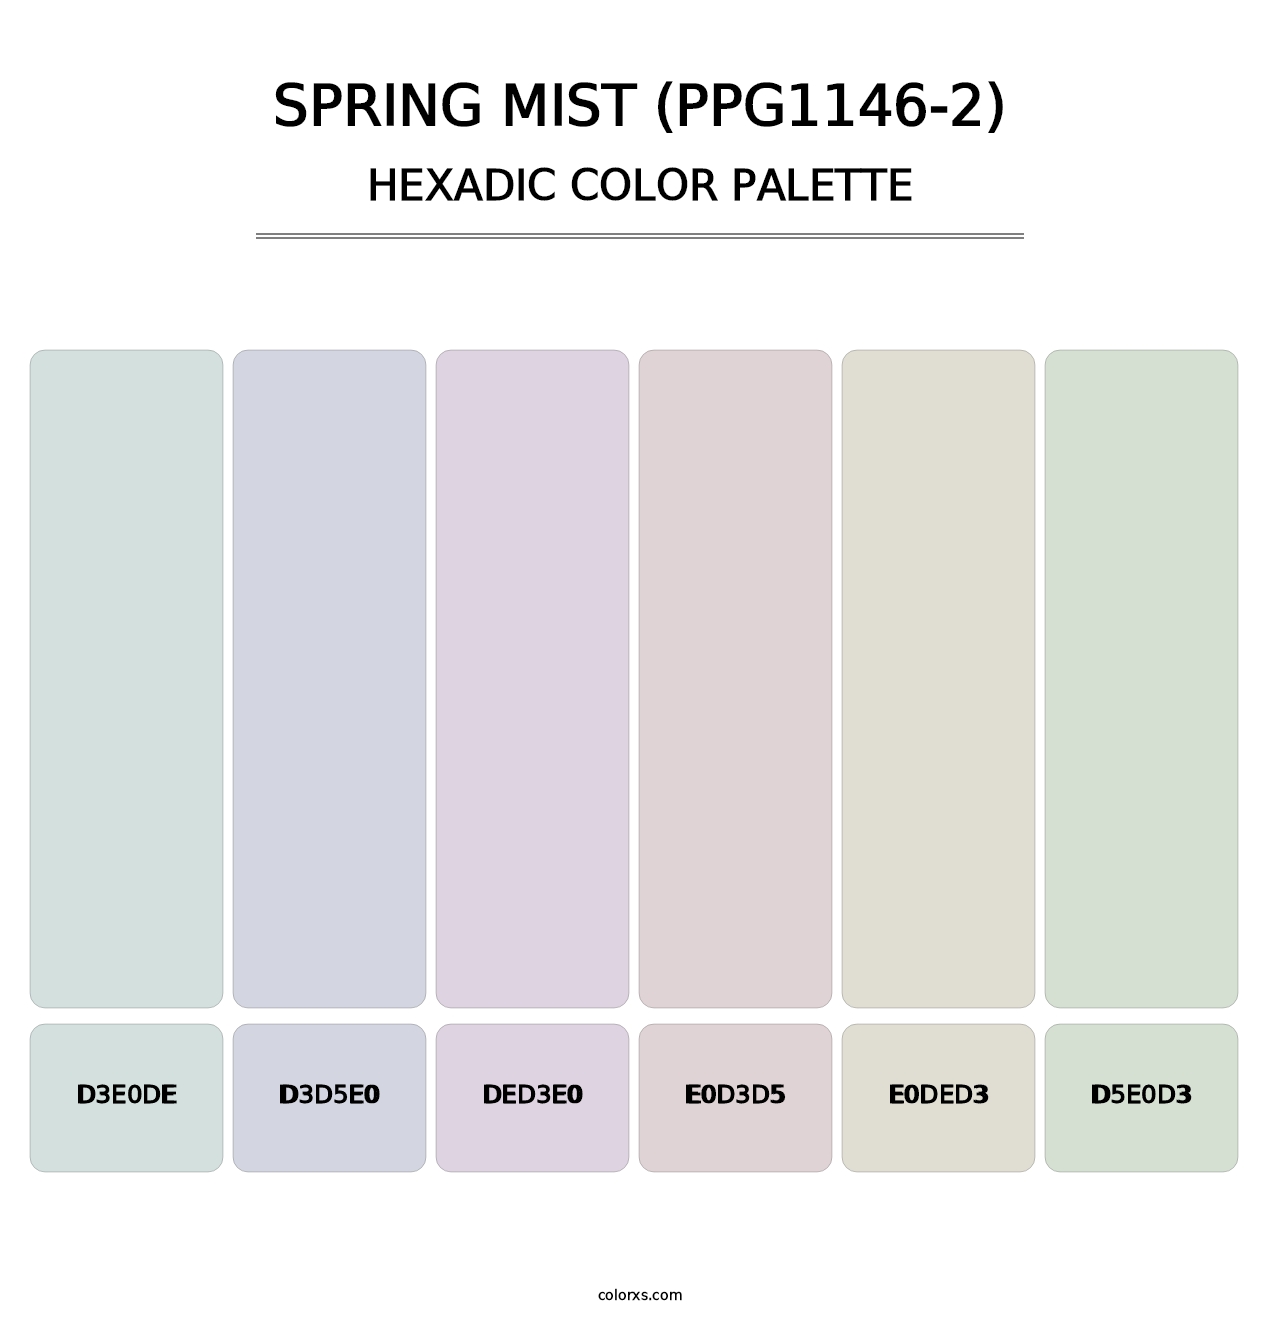 Spring Mist (PPG1146-2) - Hexadic Color Palette